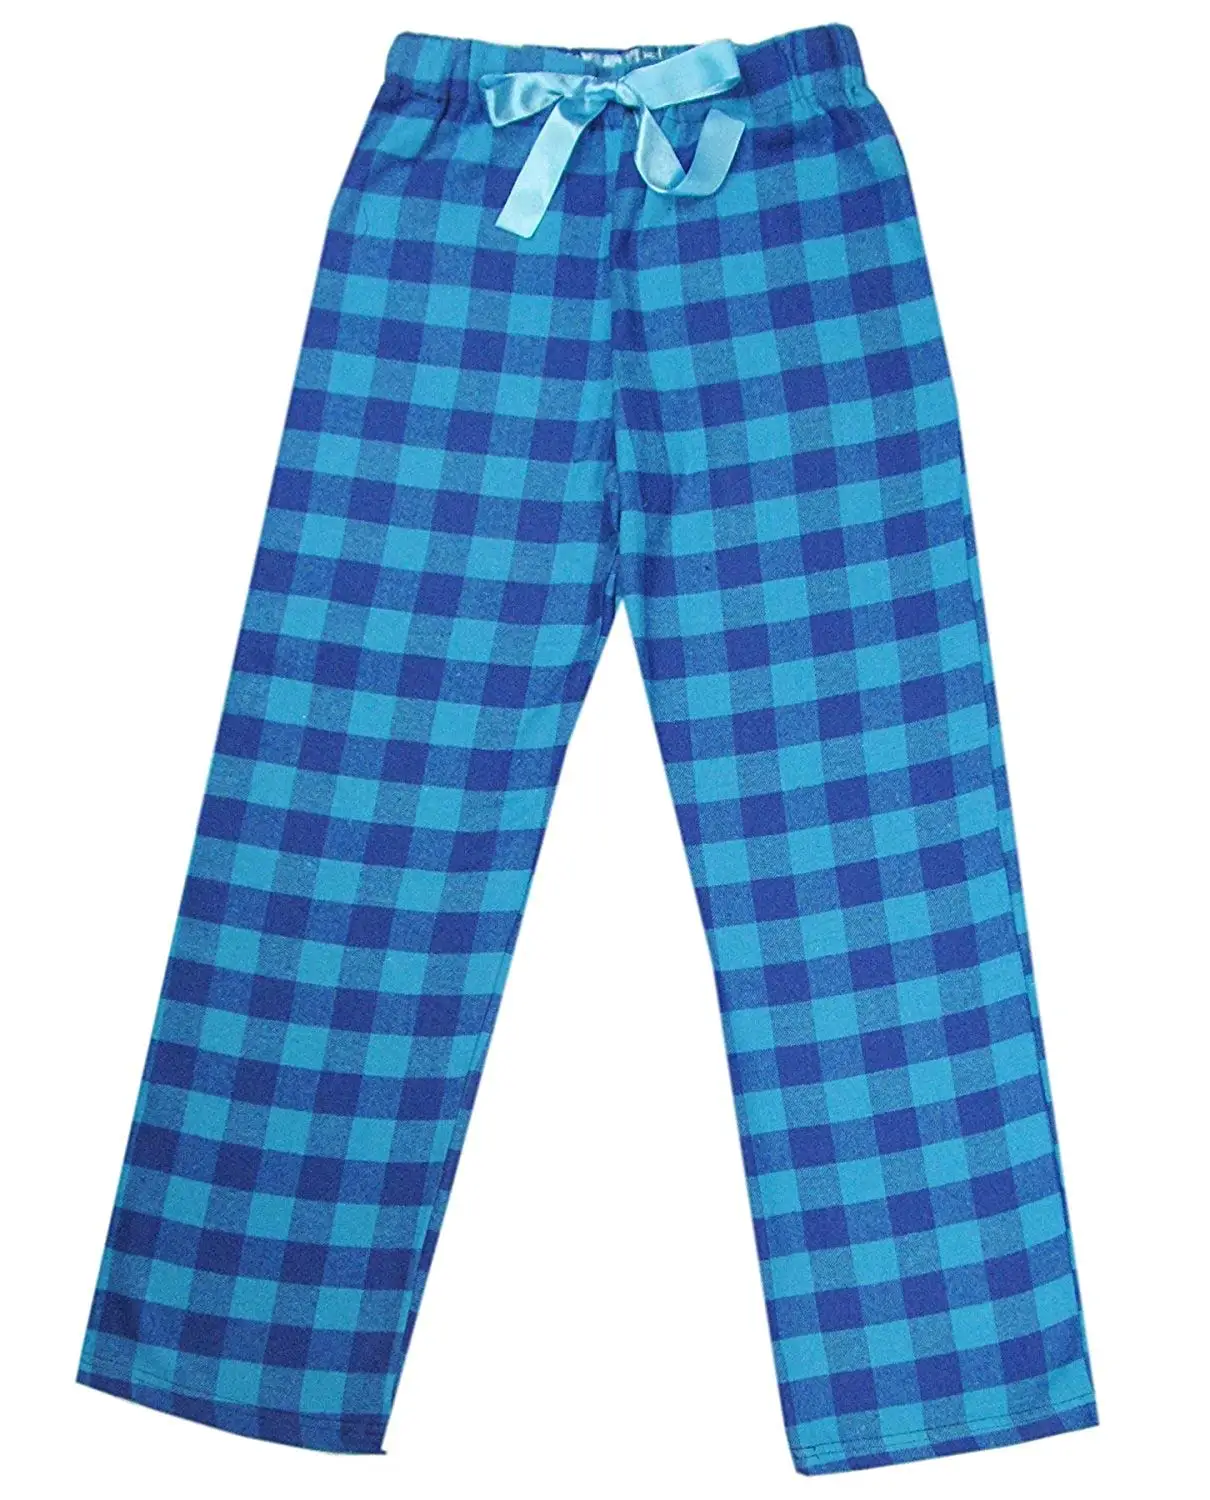 Cheap Anime Pajama Pants - Wholesale Adult Flannel Pajama Pants (Size S ...